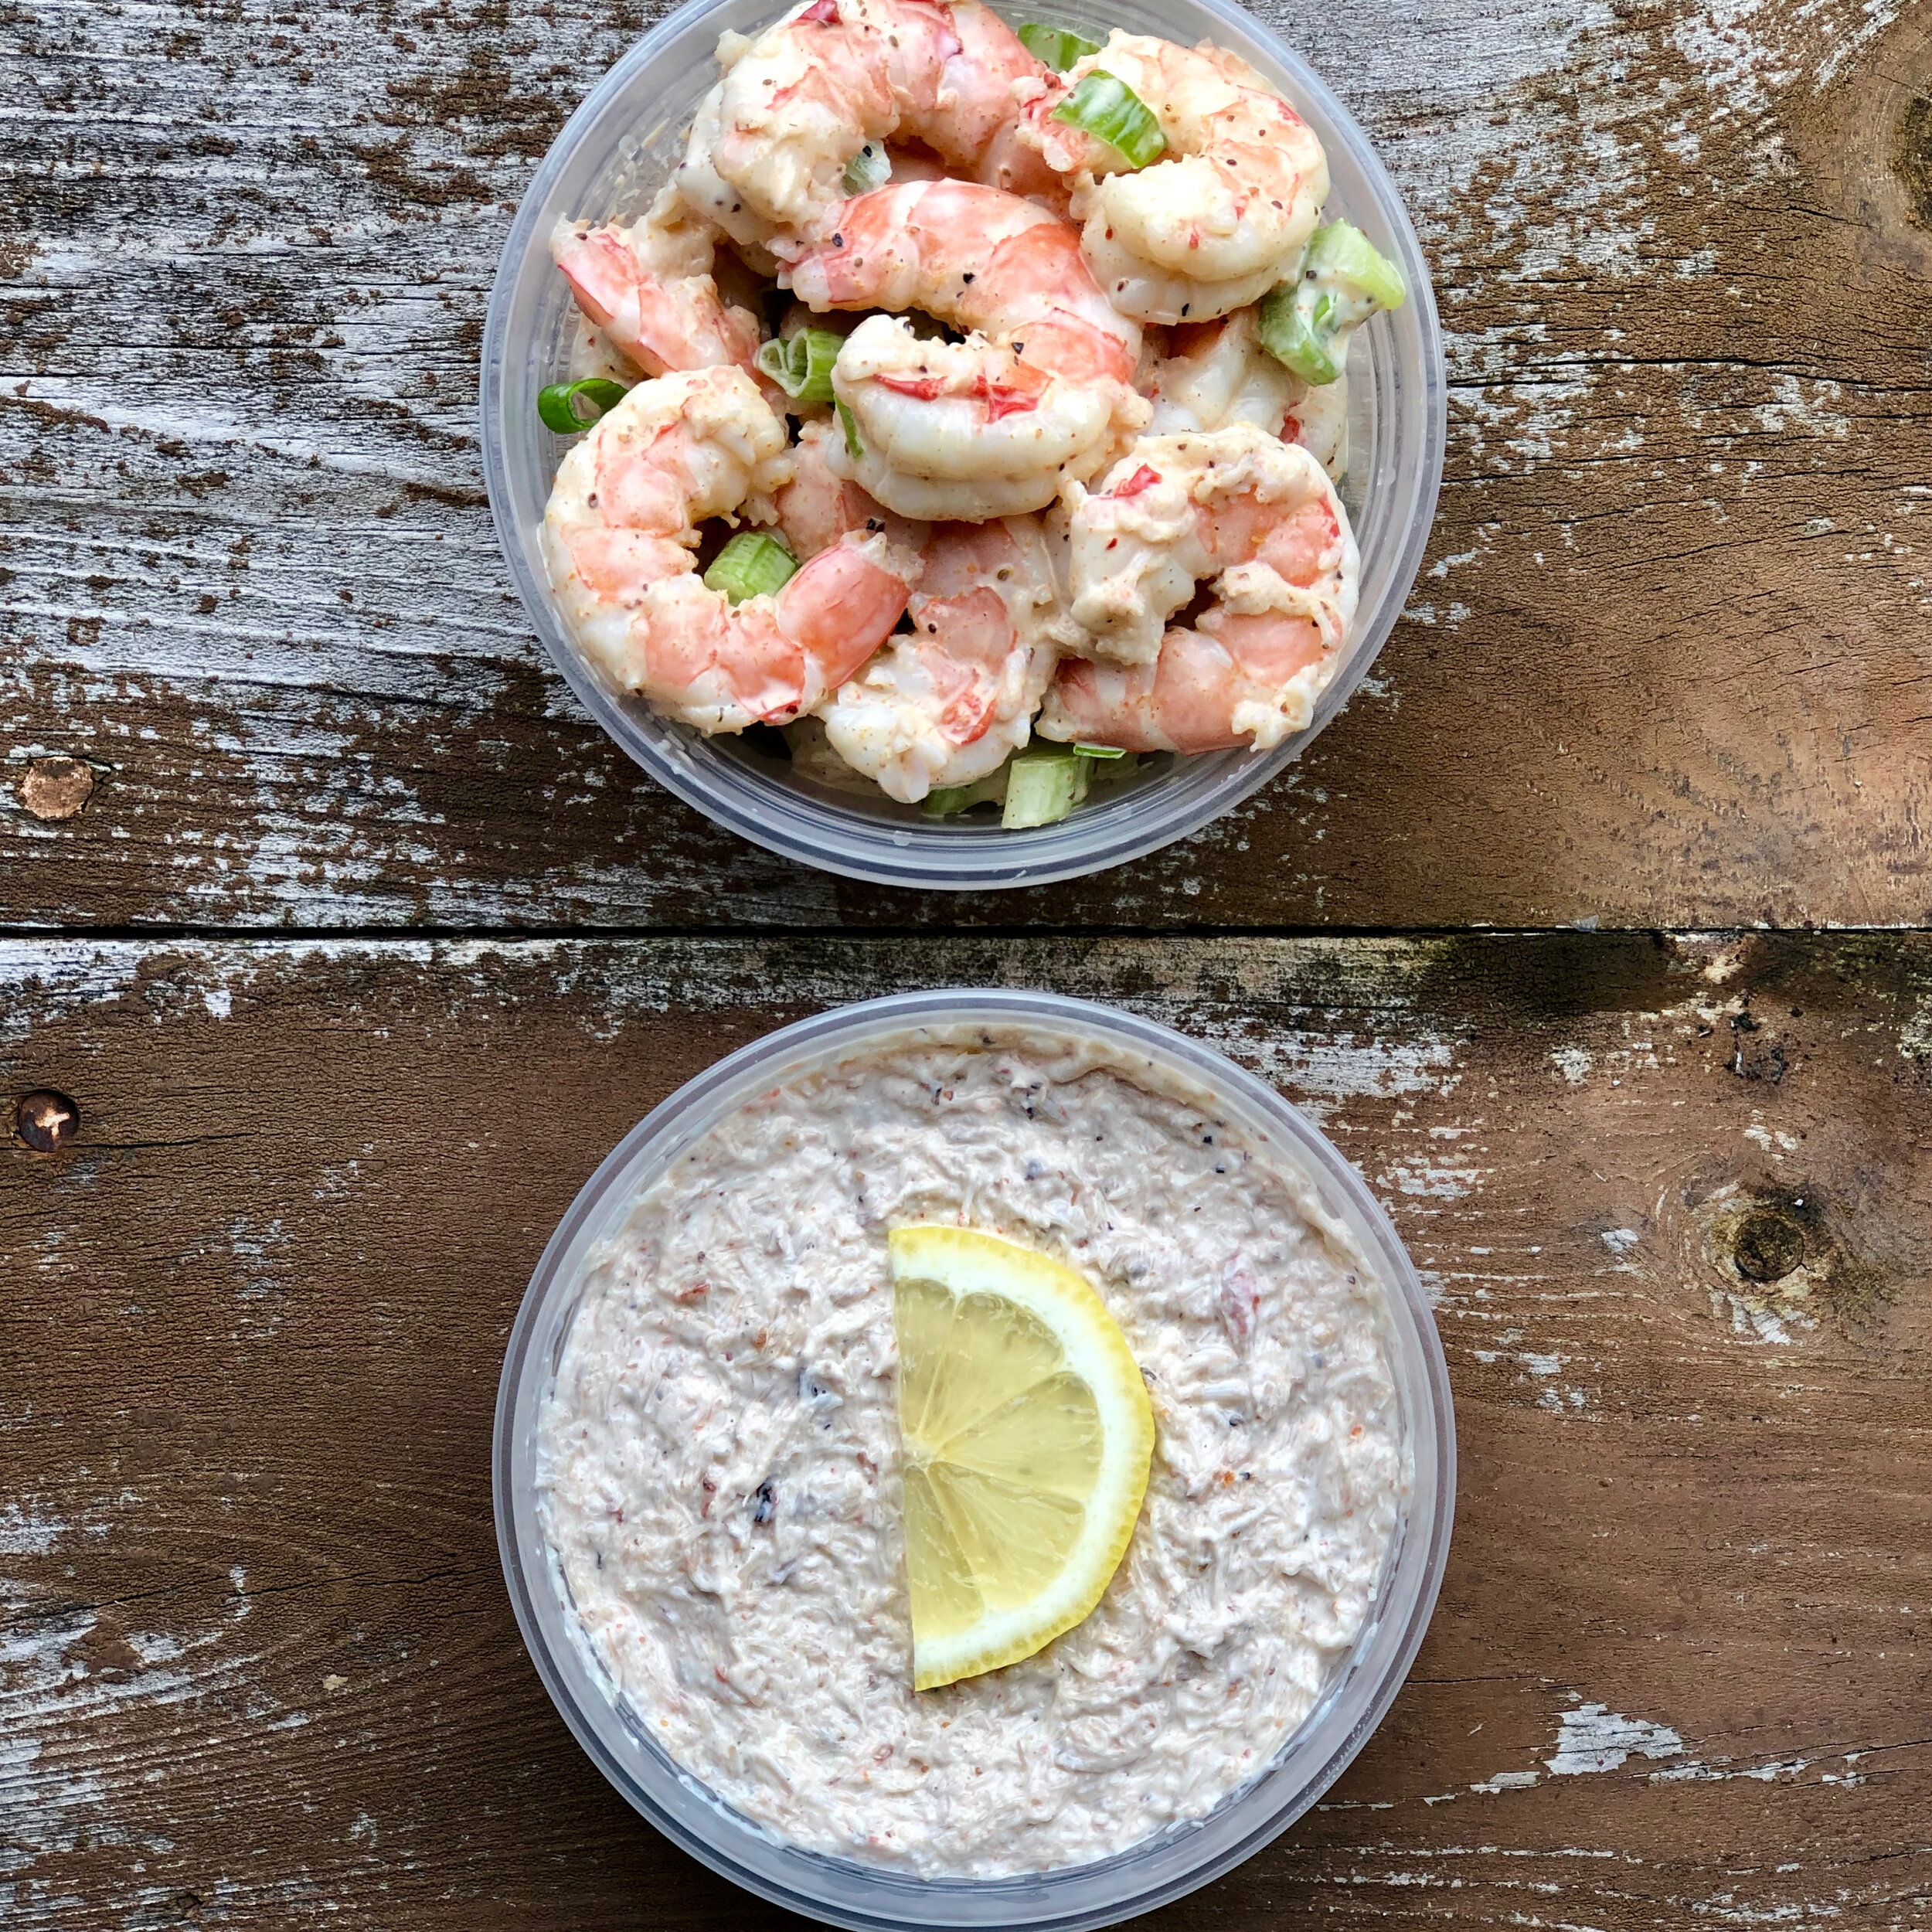 The Fisherman’s Daughter Key West Shrimp Salad and Blue Crab Dip